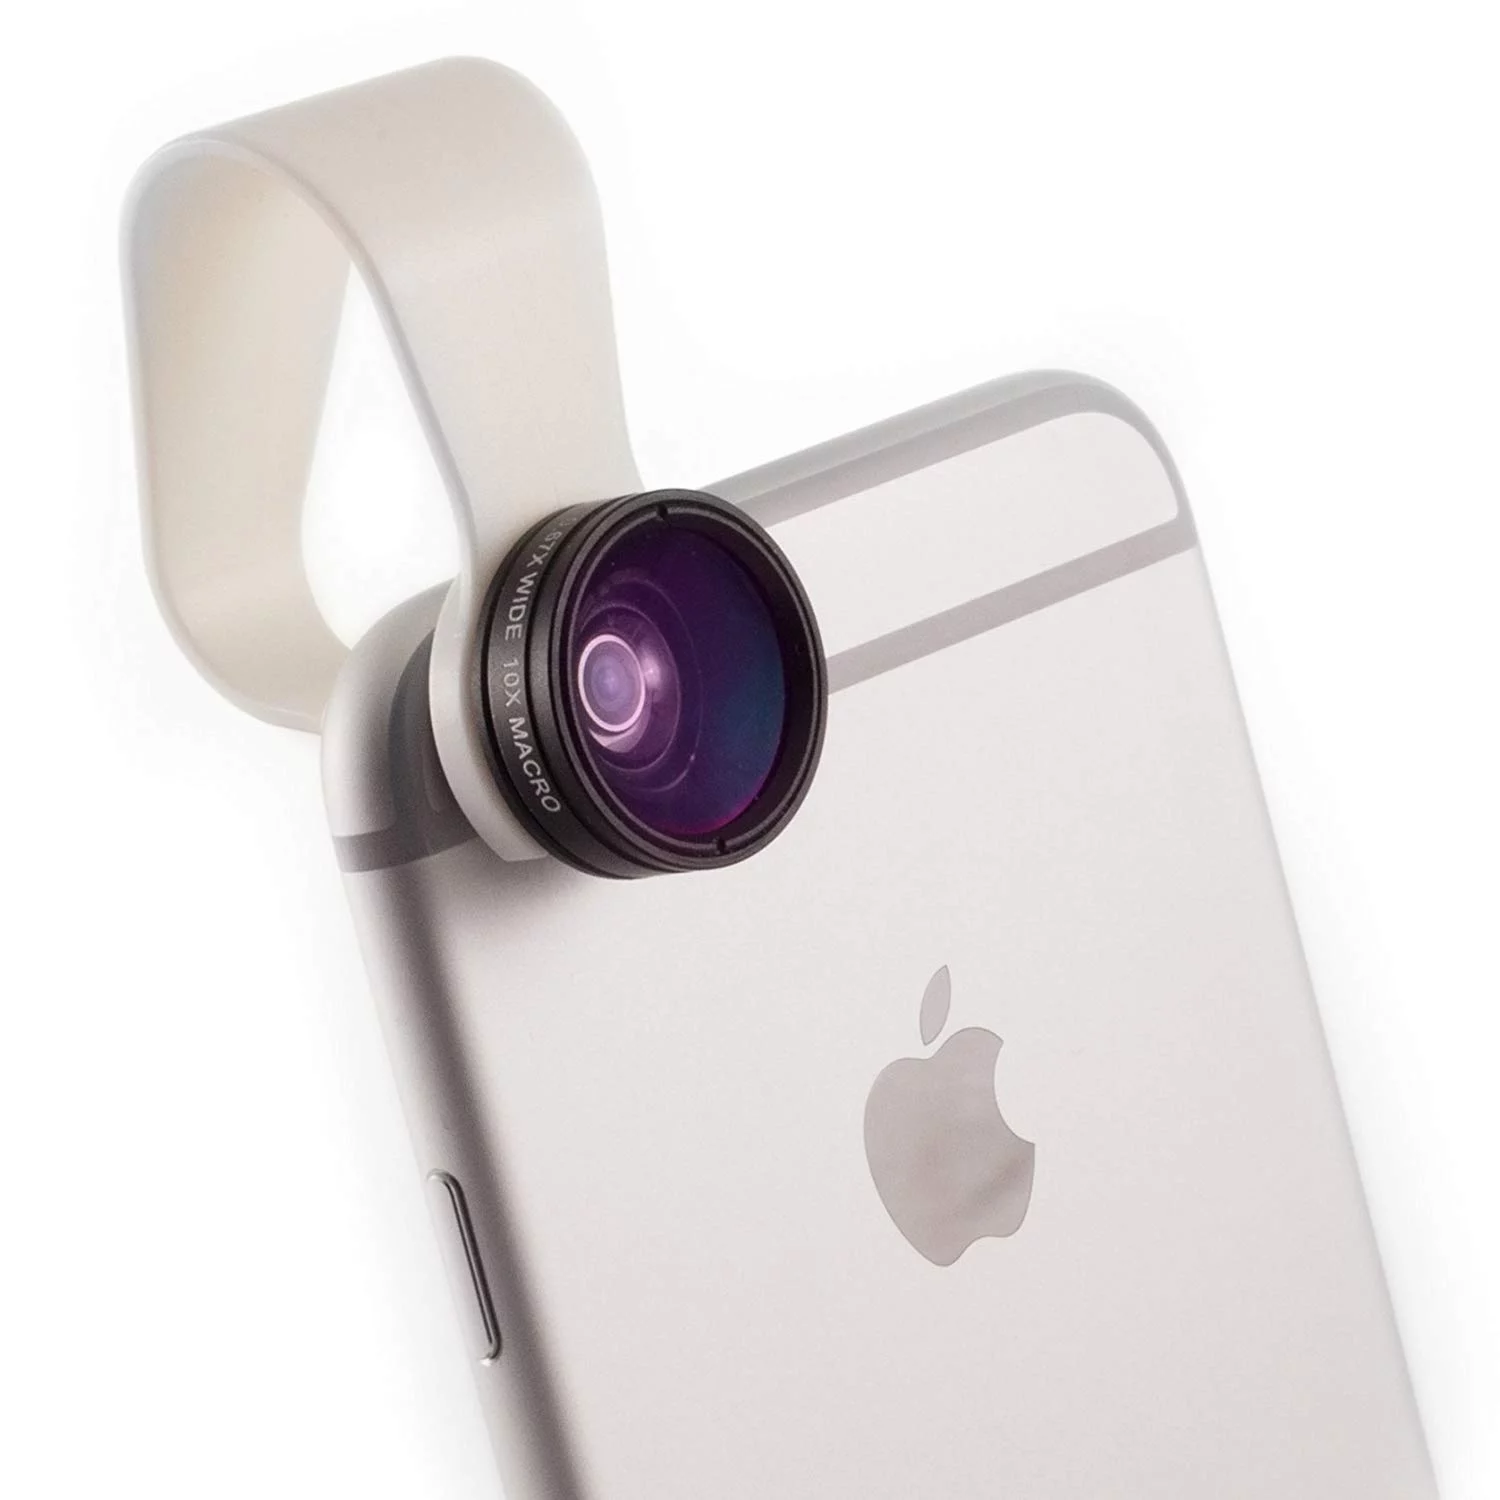 New Tech Gadgets 2022: iPhone Pocket Lens 2022